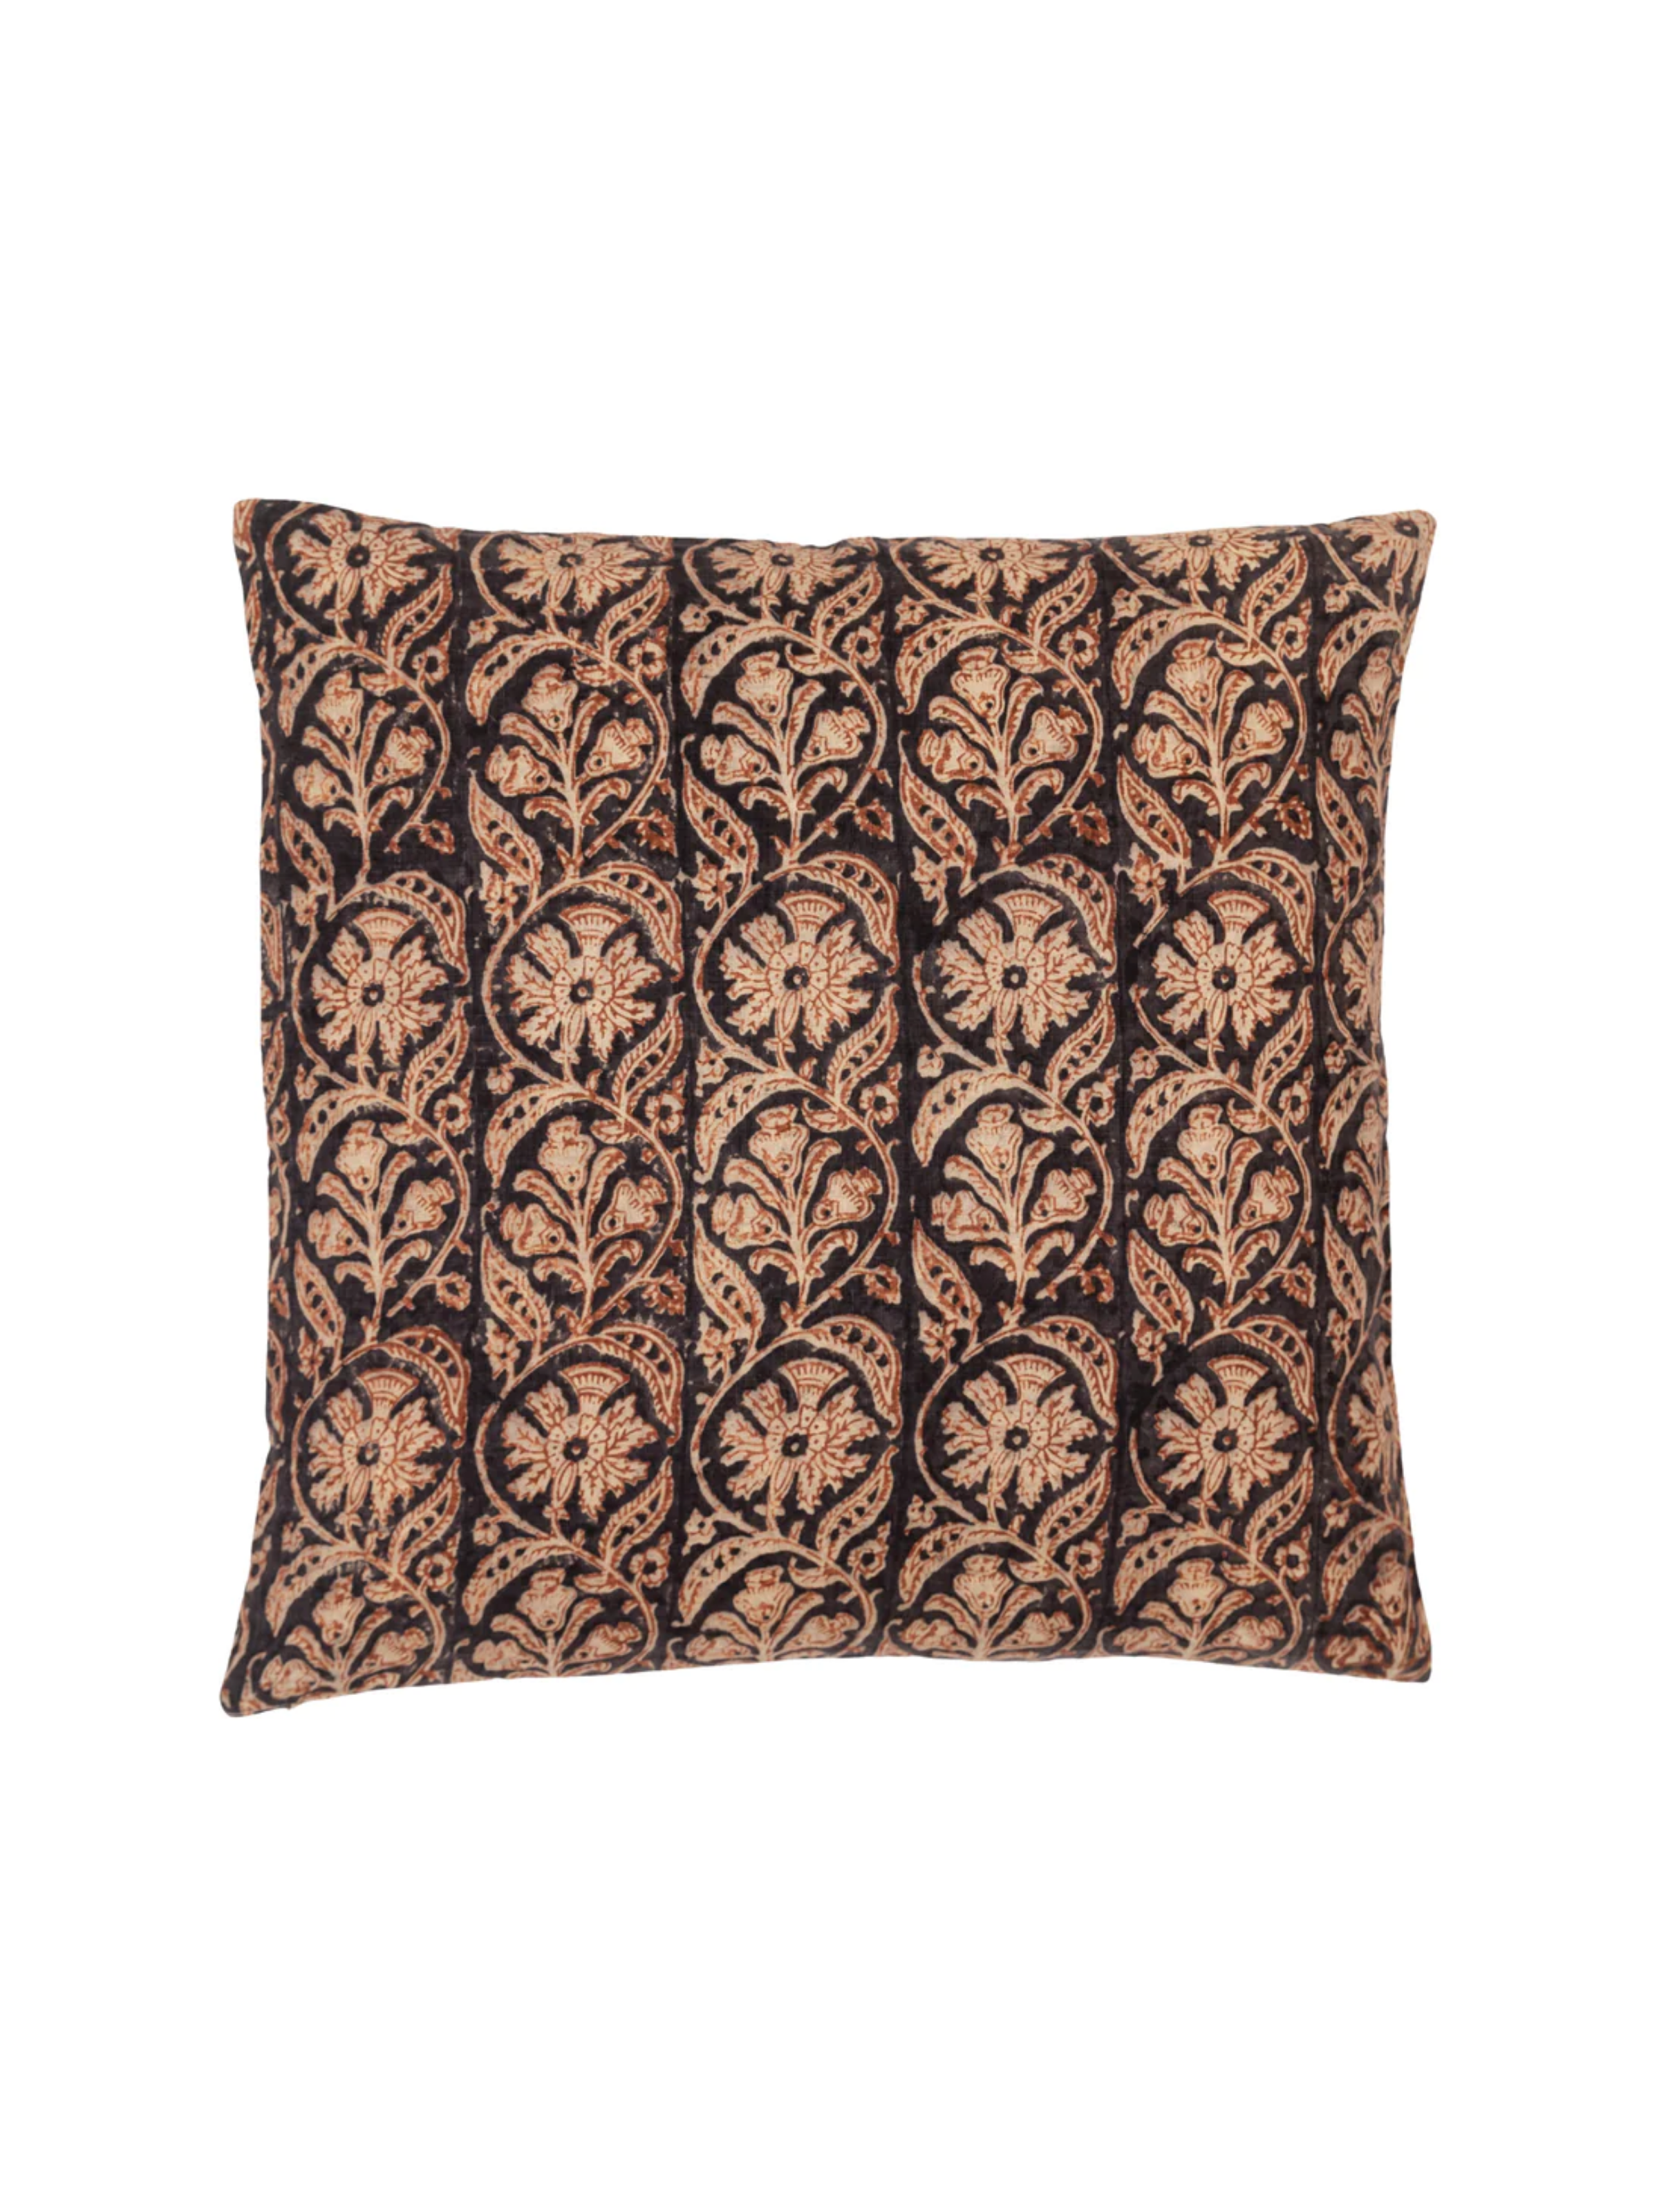 Madhurai Charcoal/Brown Decorative Pillow Cover